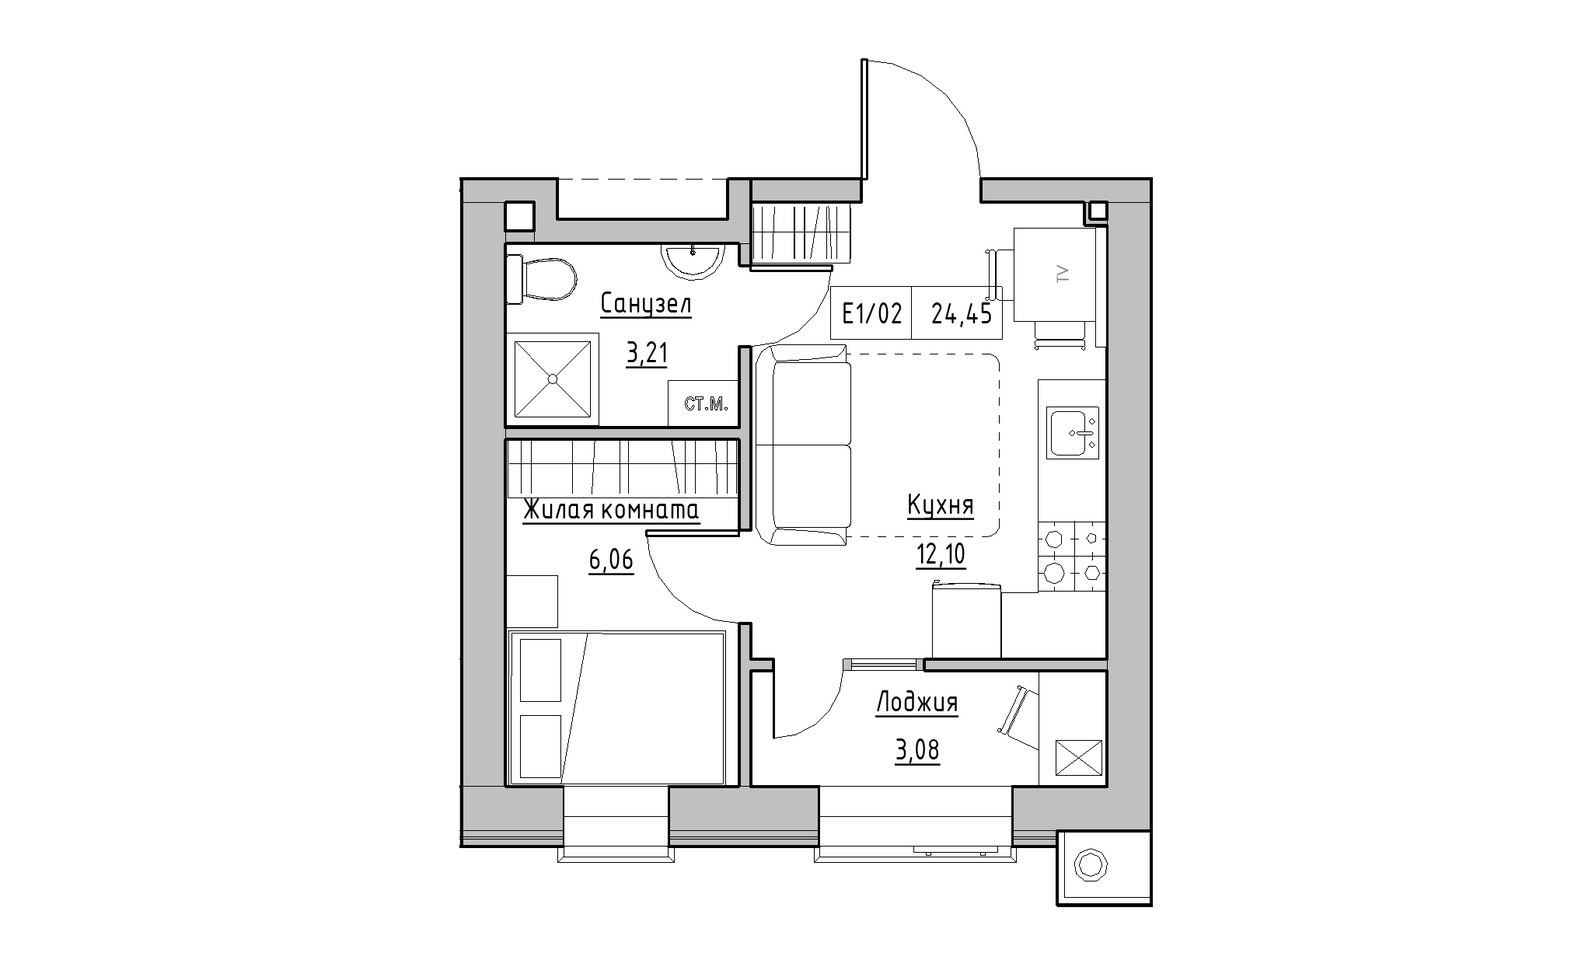 Planning 1-rm flats area 24.45m2, KS-014-02/0002.